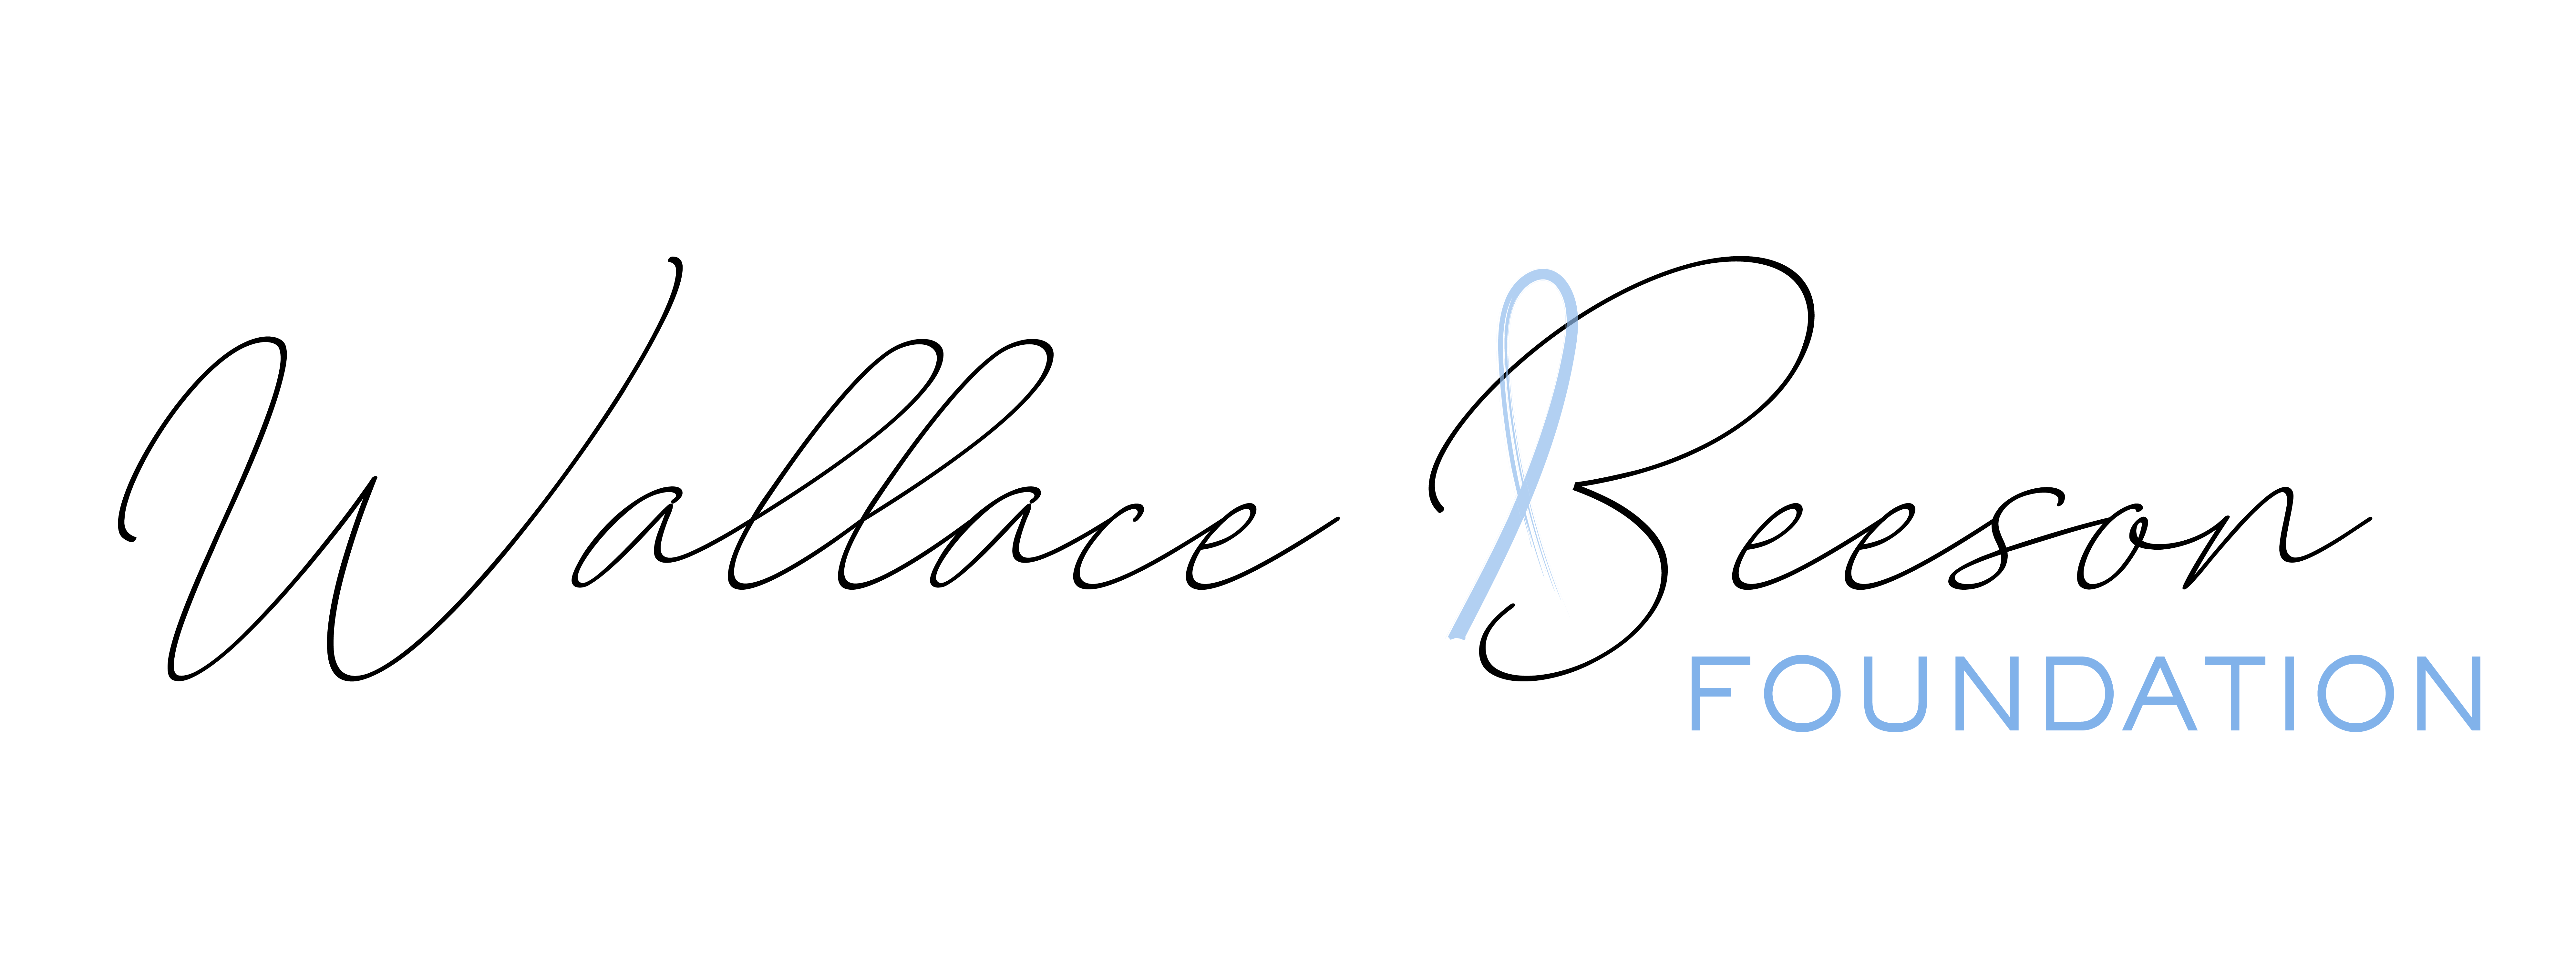 Wallace Beeson Foundation, Inc. logo